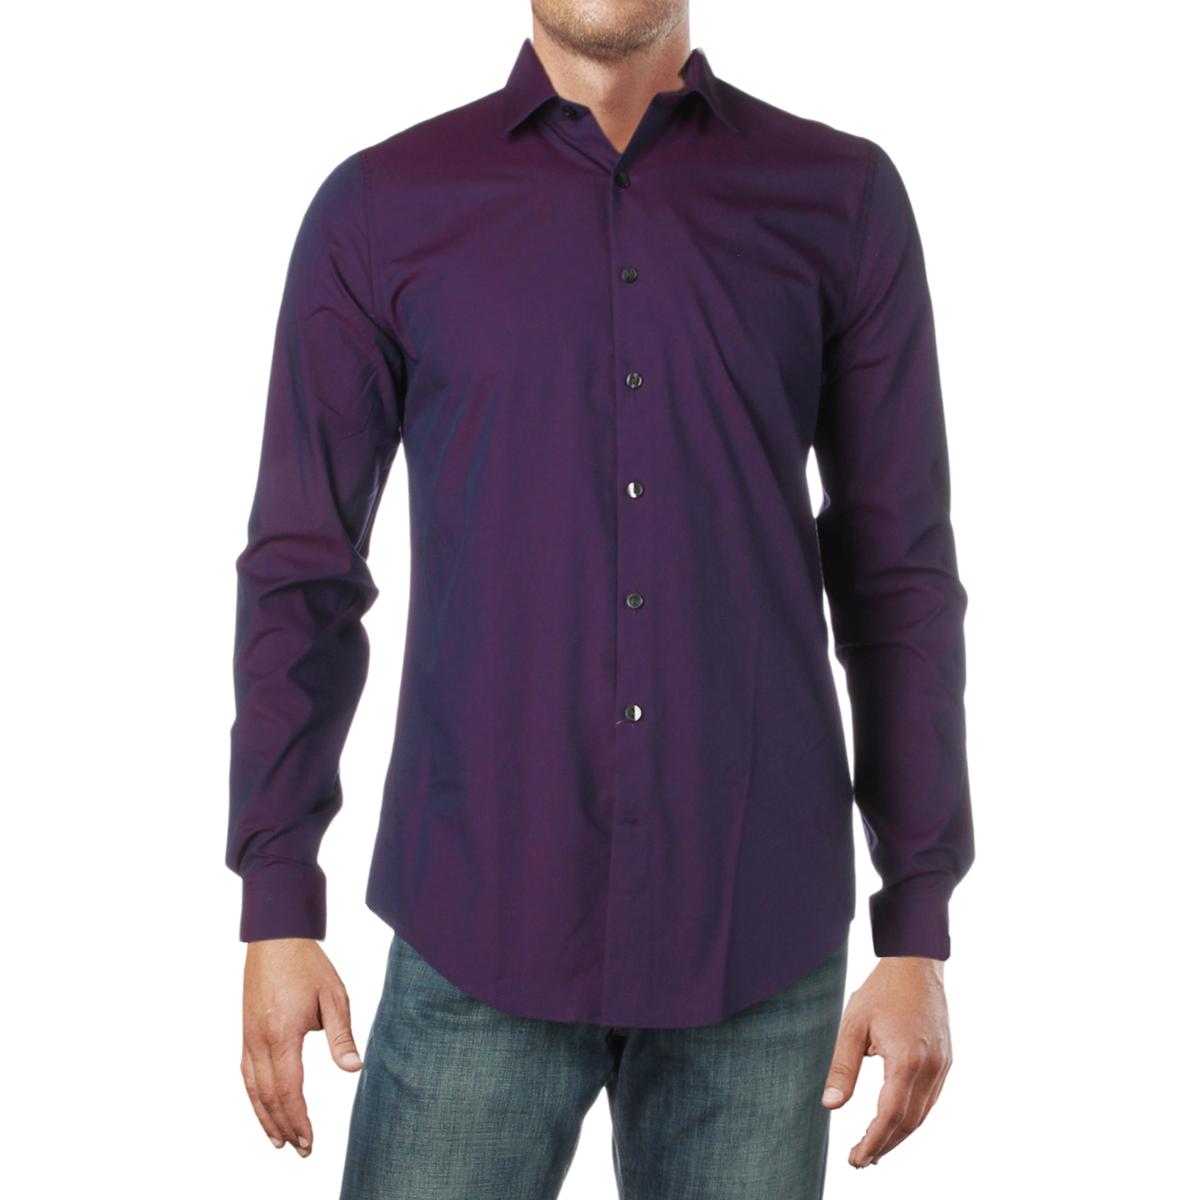 Kenneth Cole Reaction Mens Purple Slim Fit Dress Shirt 17 34/35 XL BHFO ...